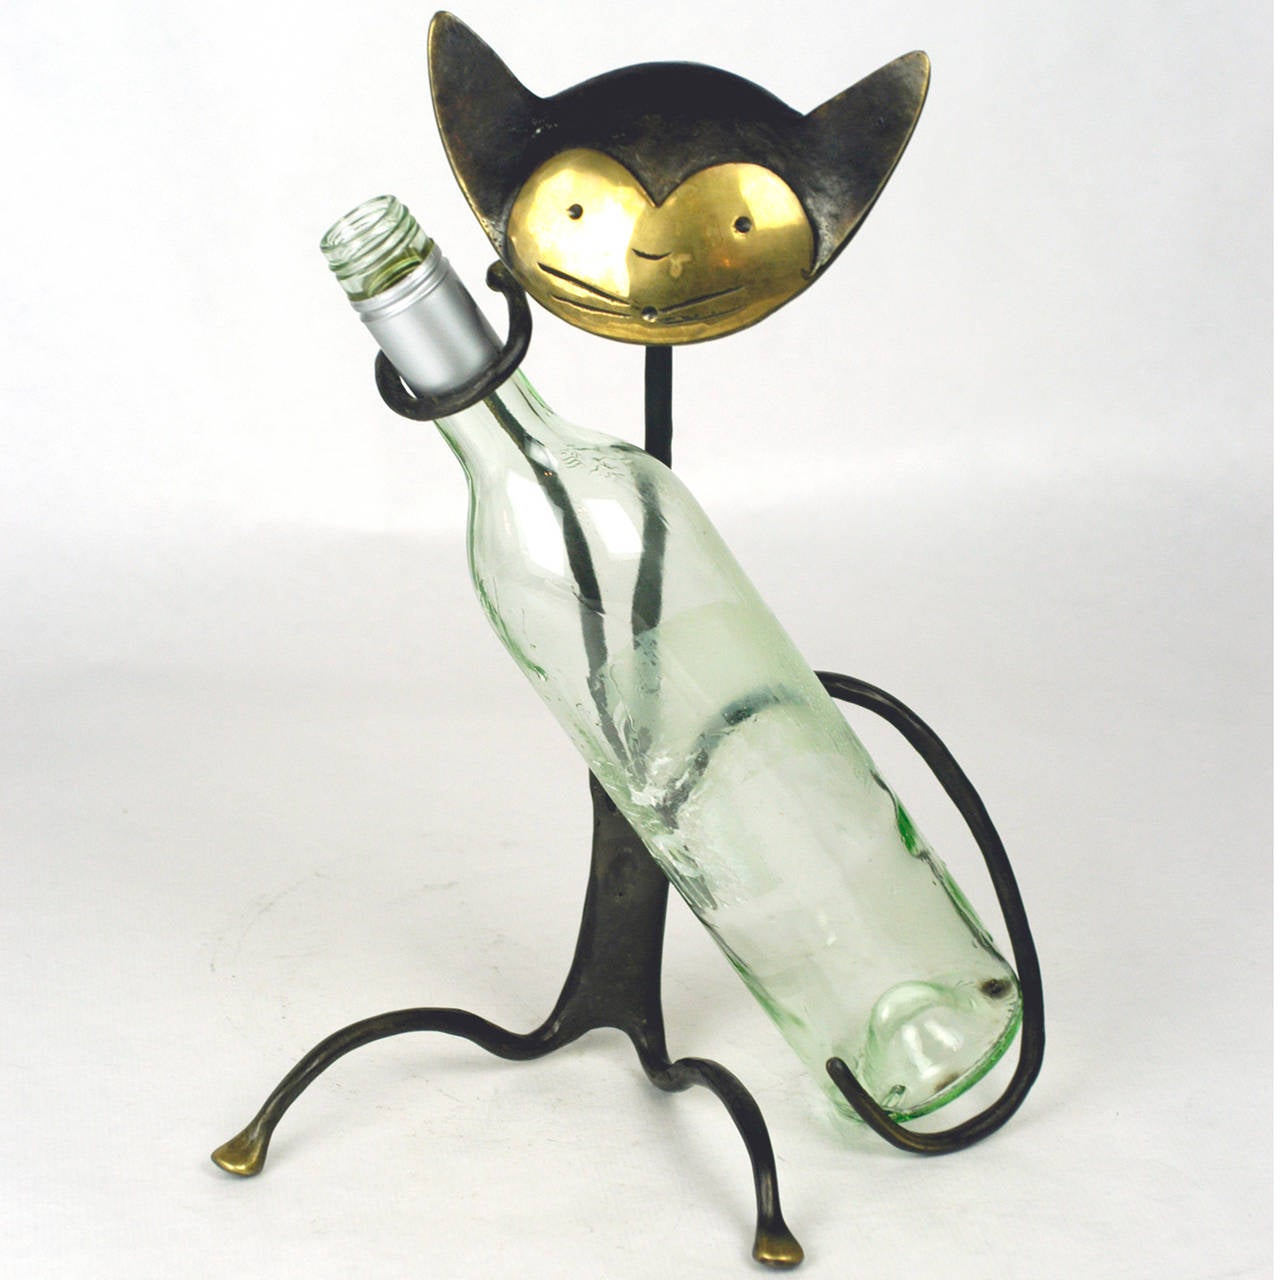 Big iconic Austrian 1950s brass cat bottle holder.